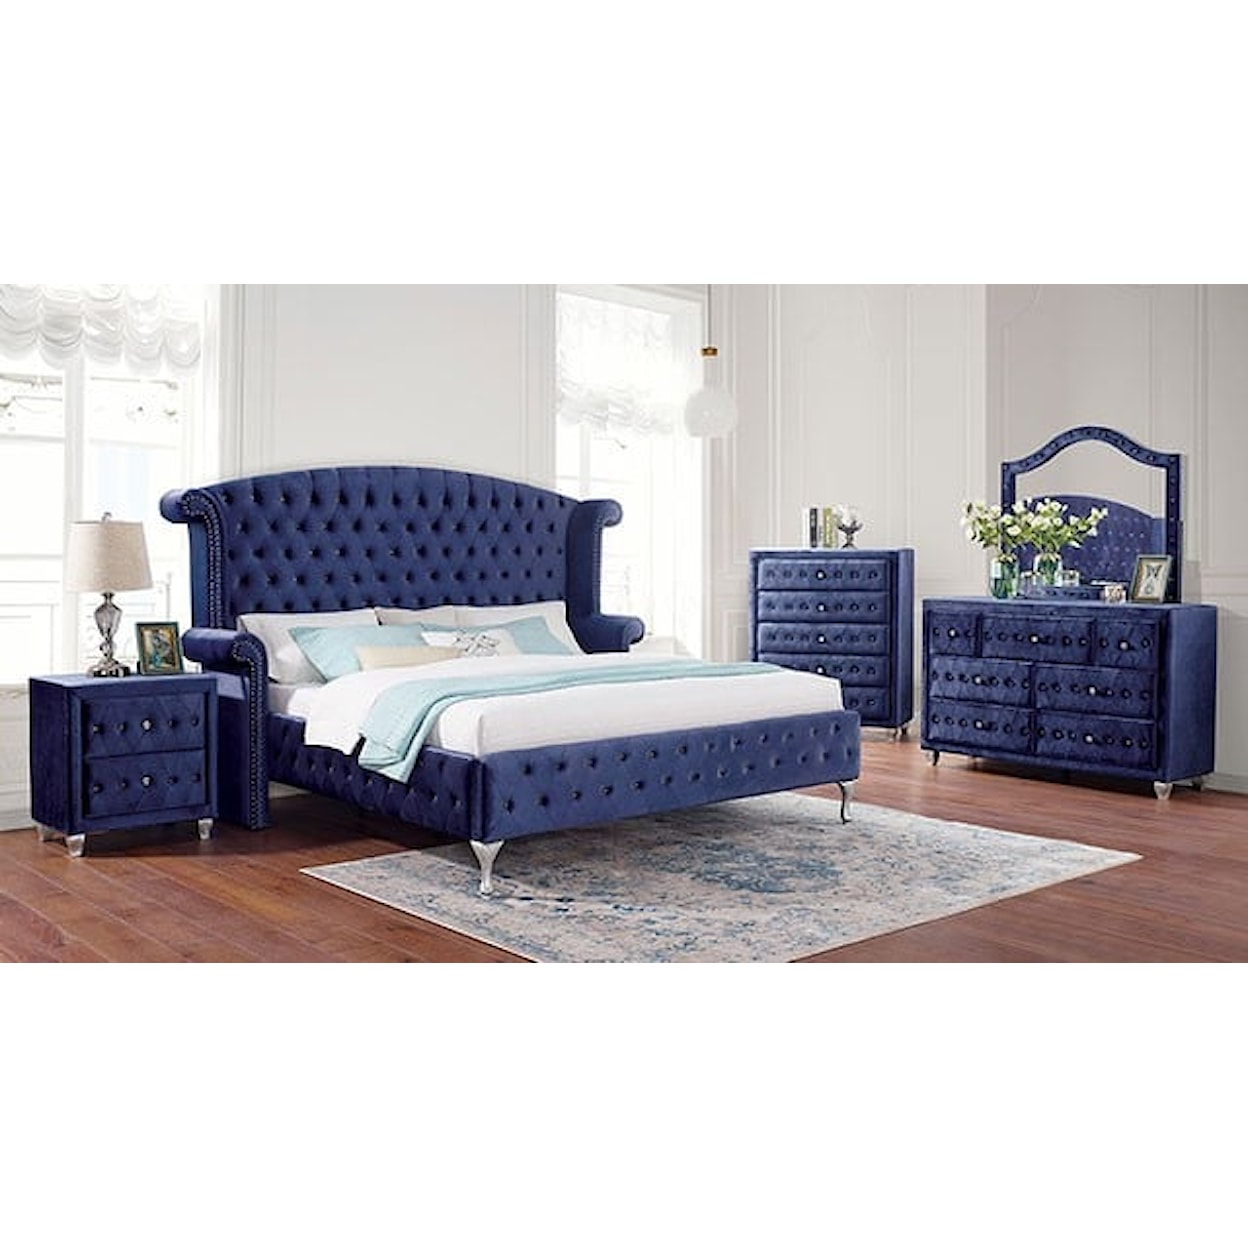 Furniture of America Alzir Queen Bed, Blue